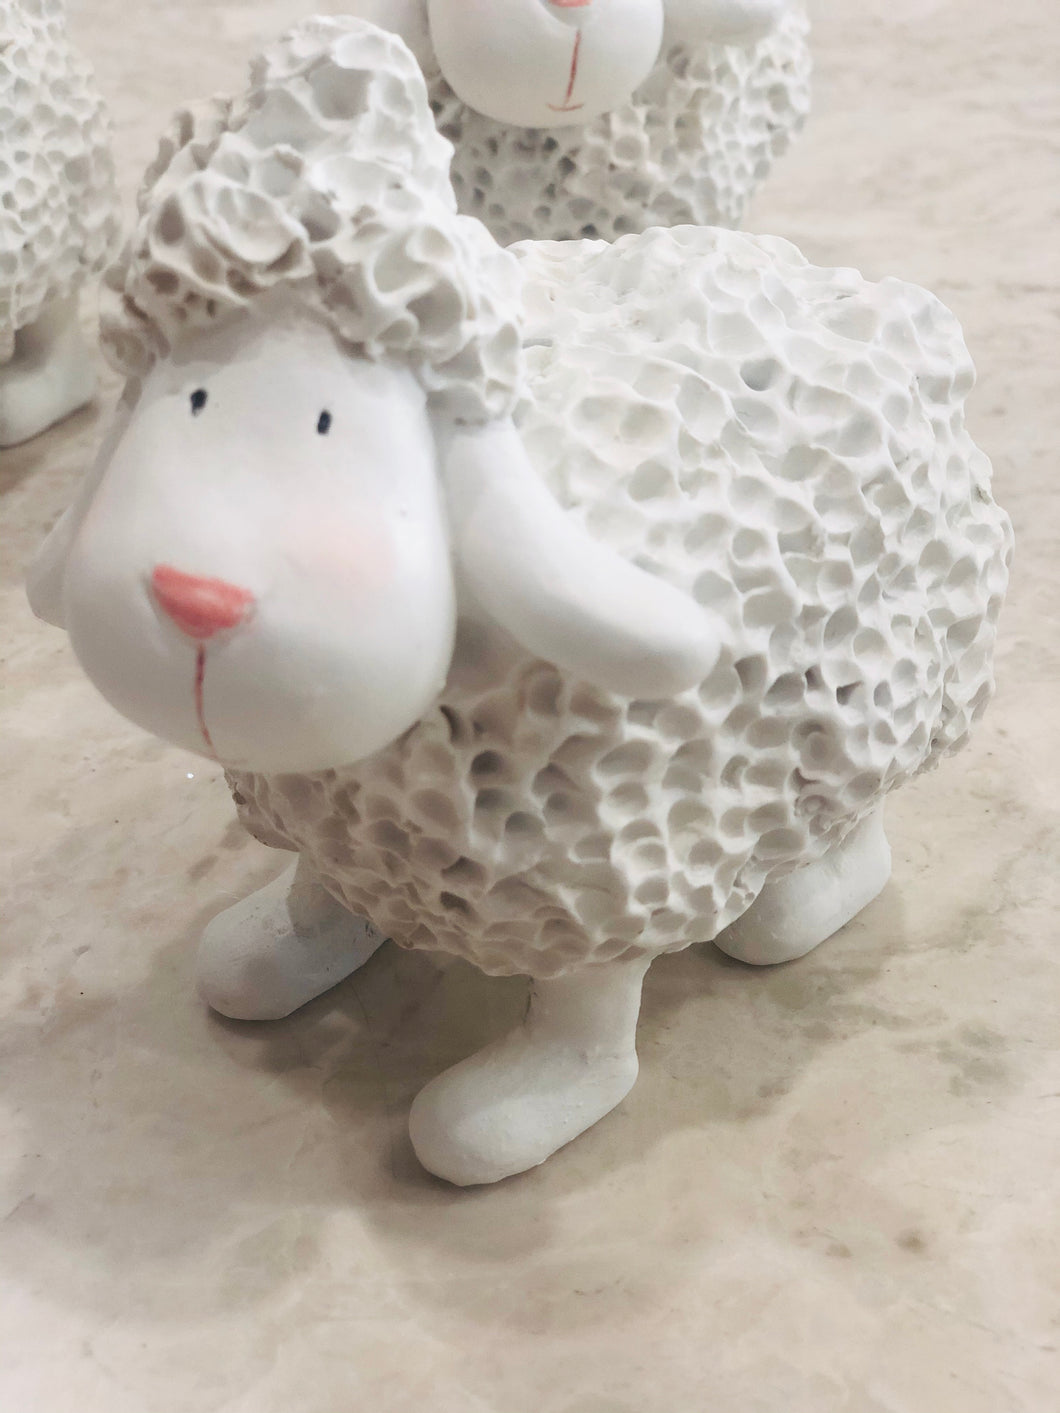 Sheep figurine